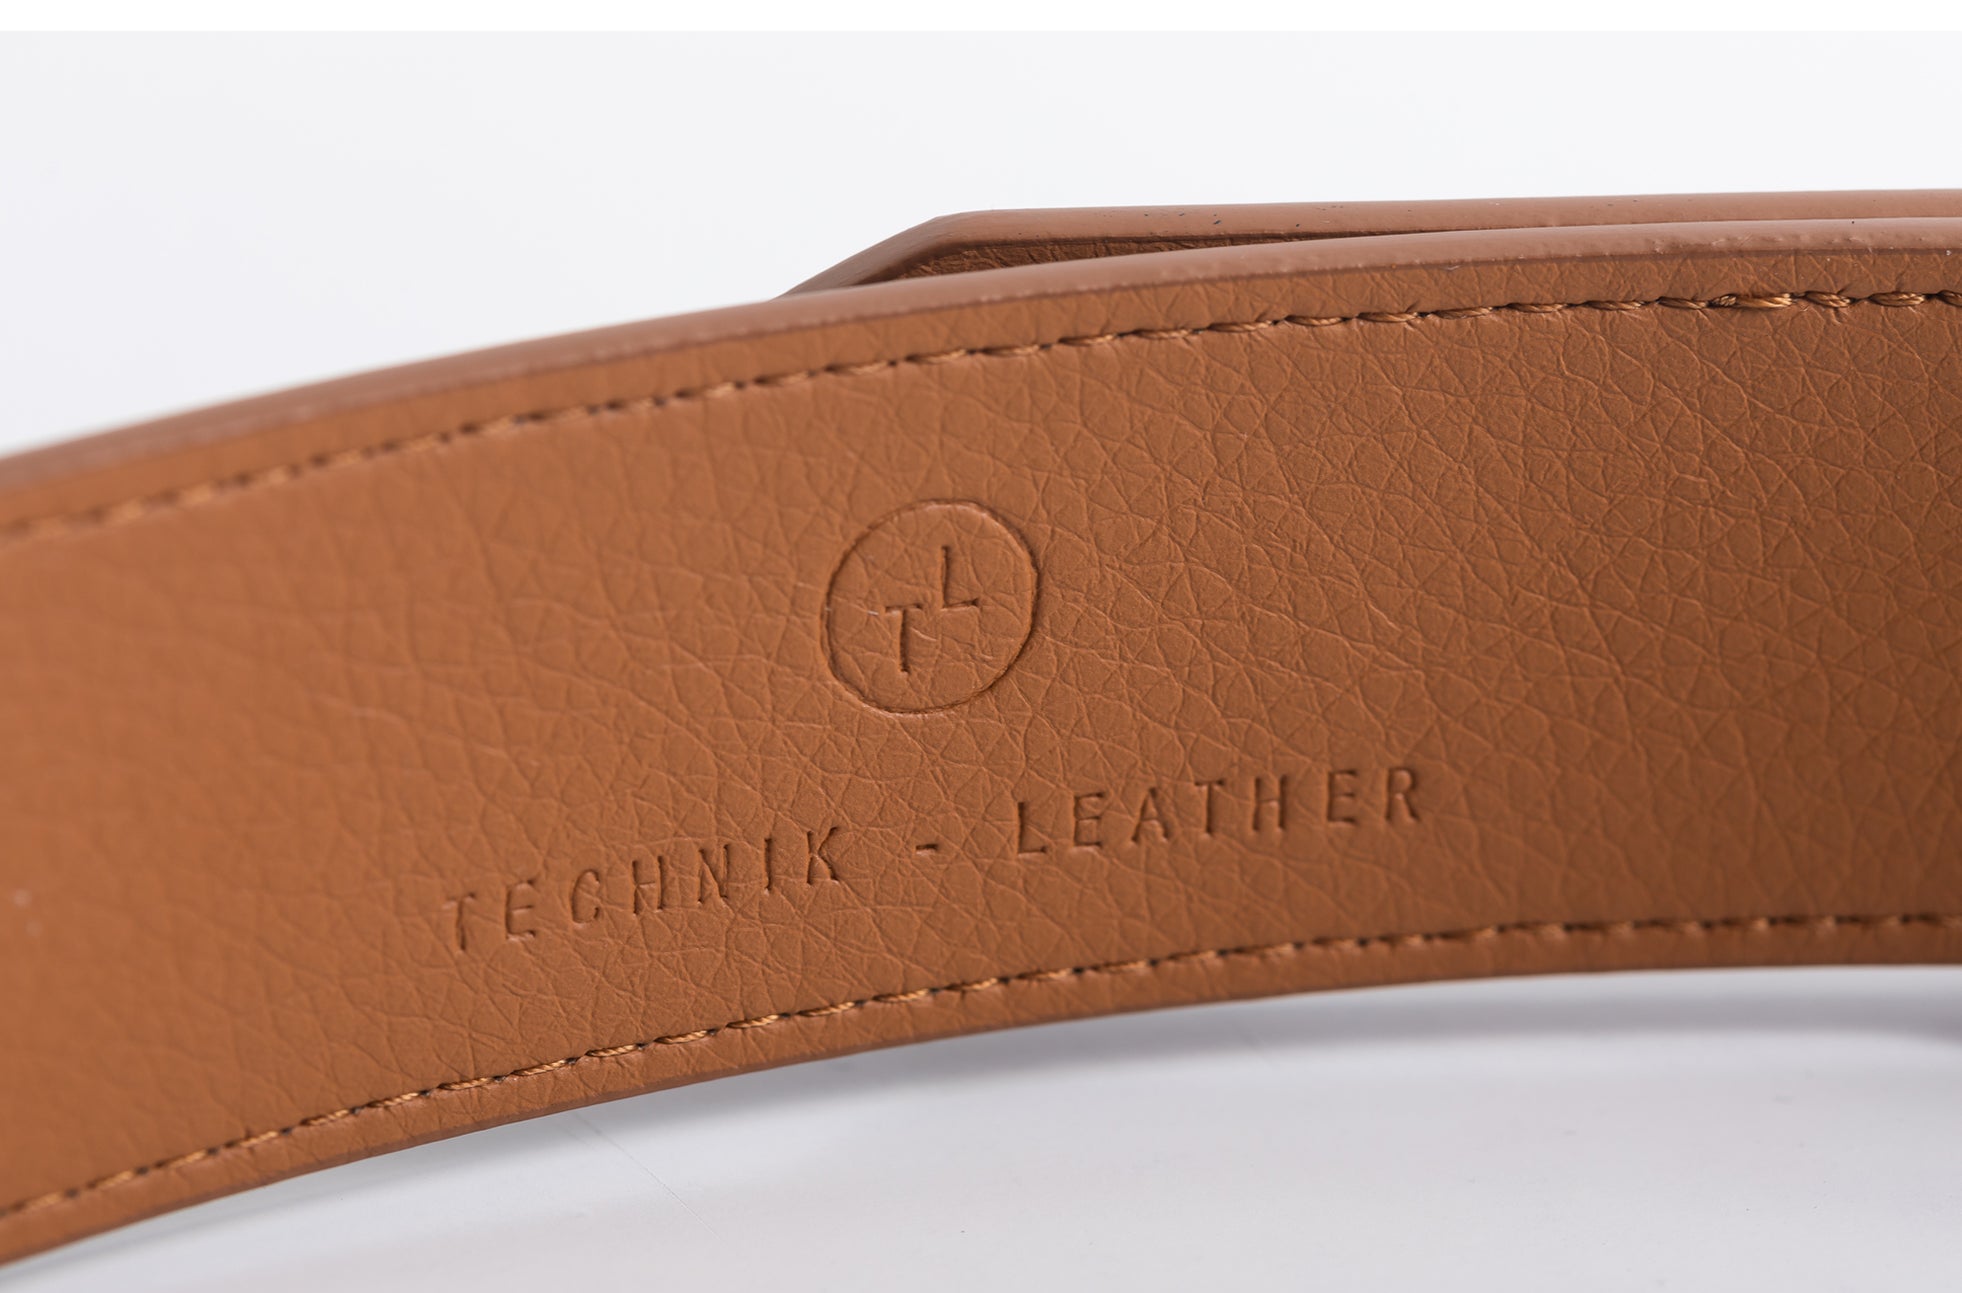 The Men's Belt in Technik-Leather in Caramel image 